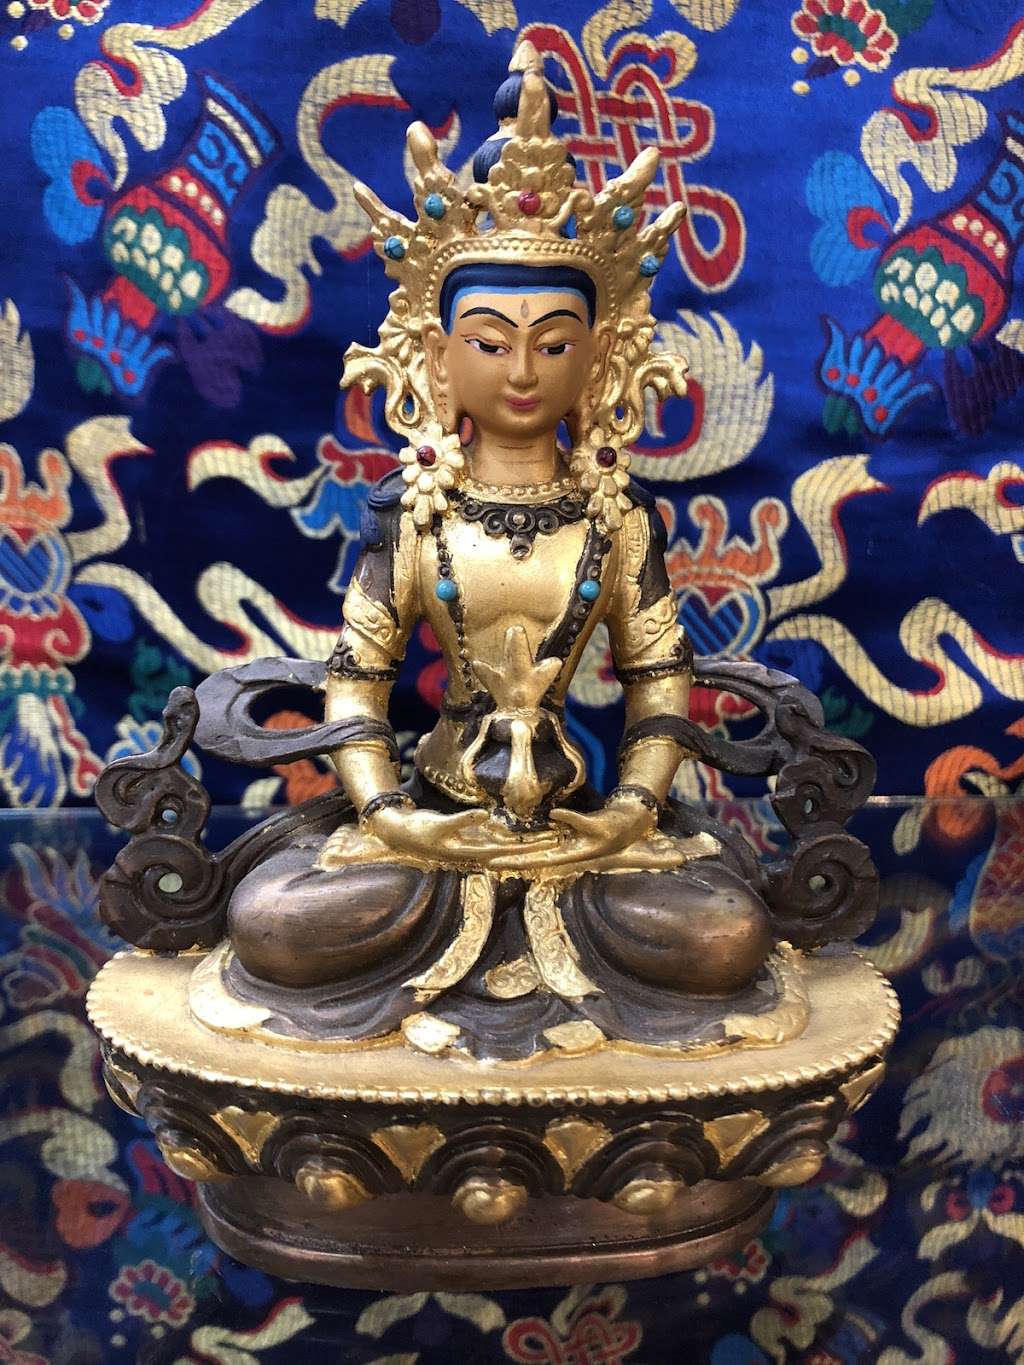 Zambala Tibet Collection | 1904 W Valley Blvd, Alhambra, CA 91803 | Phone: (626) 289-9787